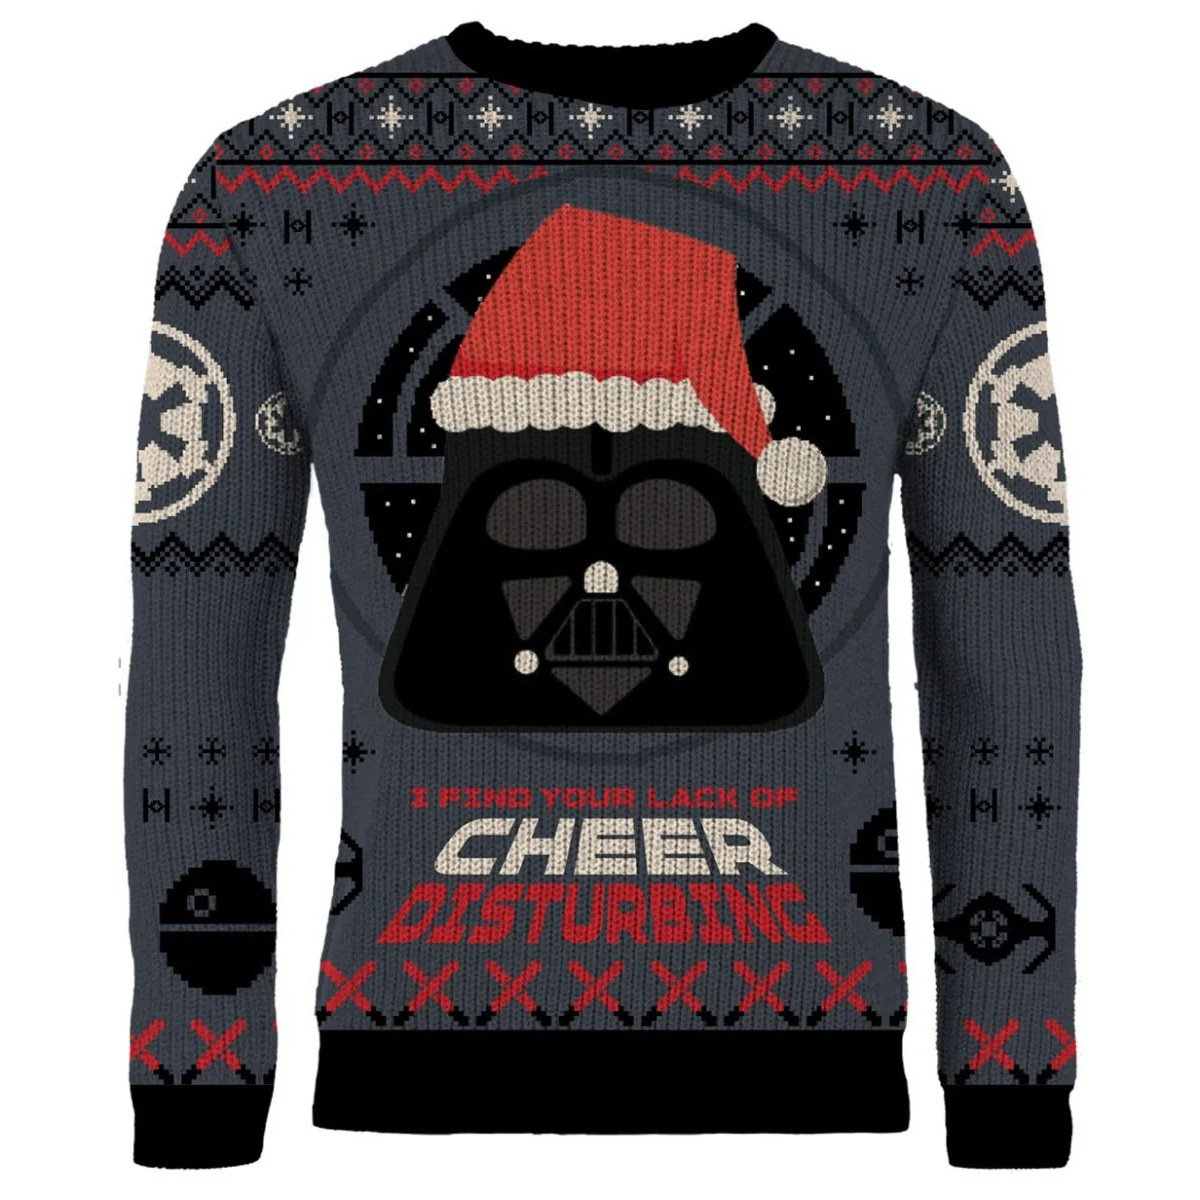 STAR WARS - Darth Vader Lack Of Cheer Christmas Jumper